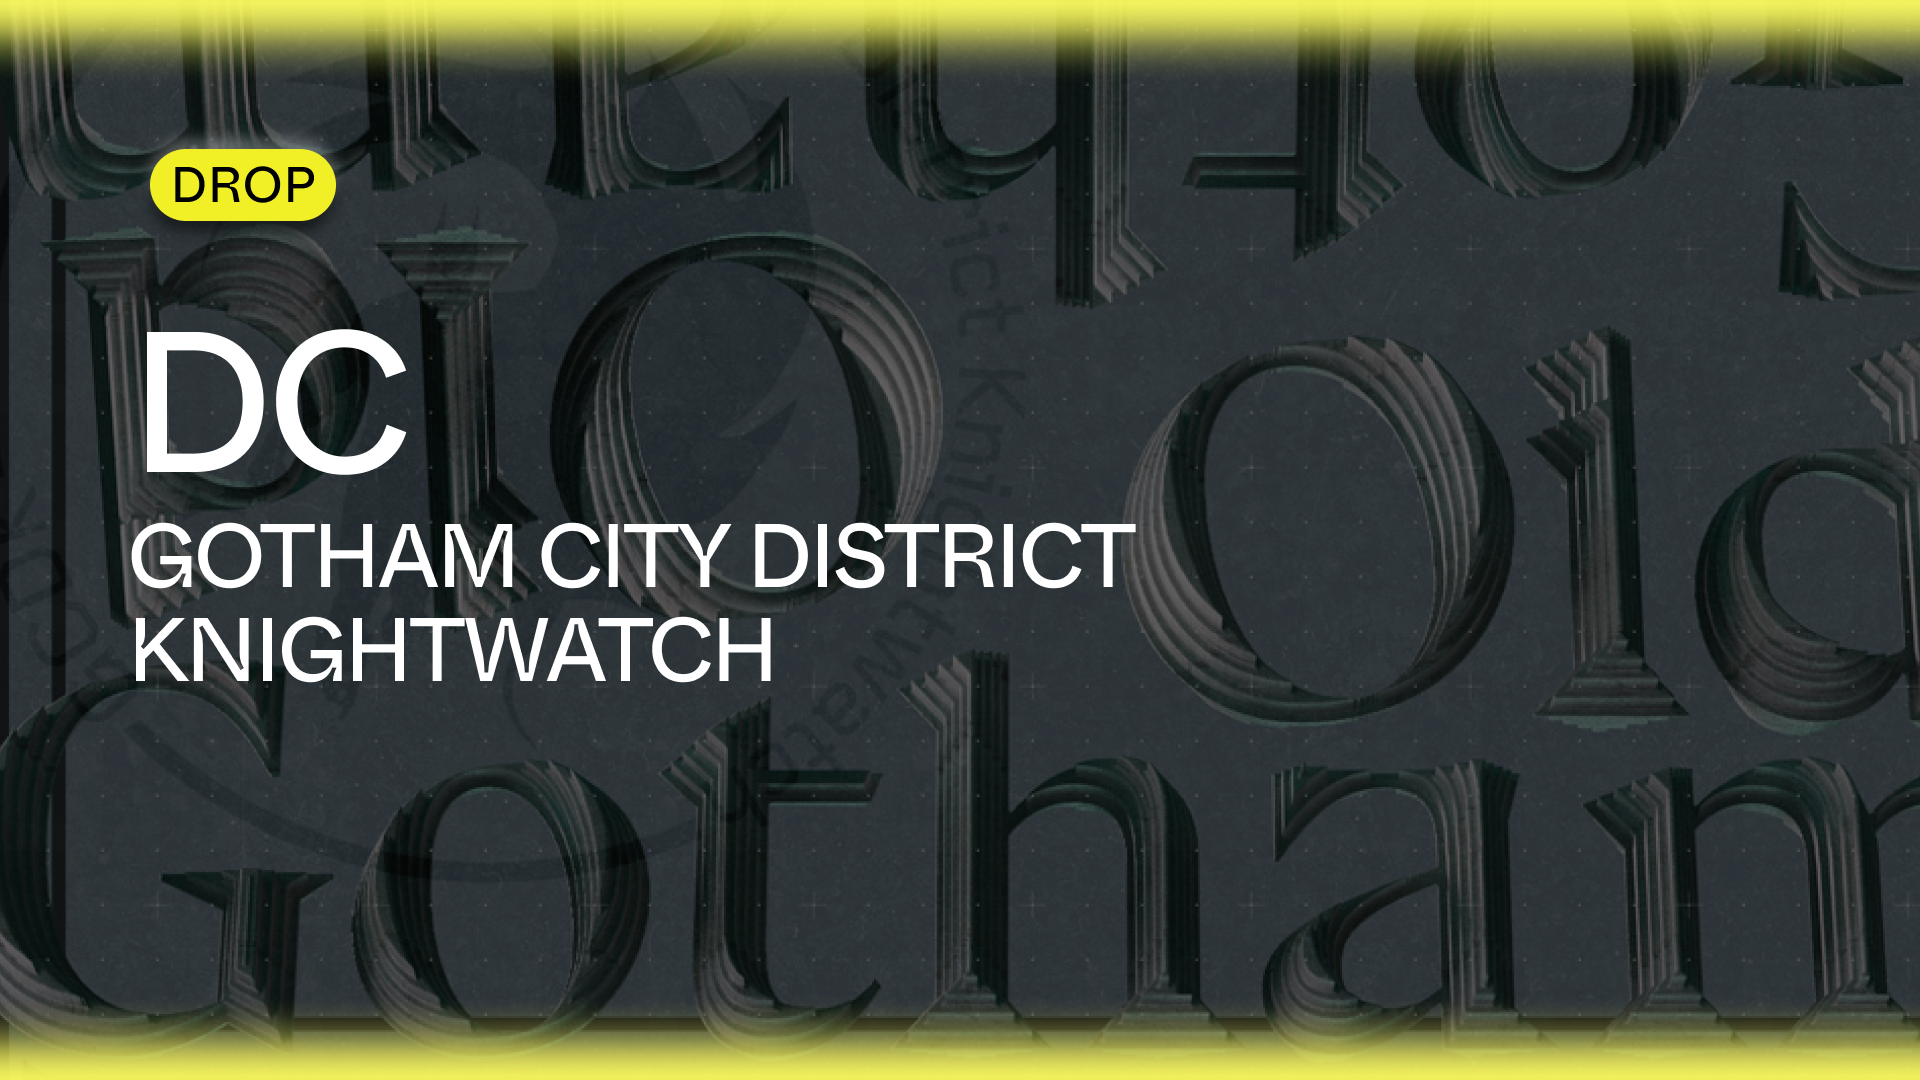 Introducing Gotham City District Knightwatch.